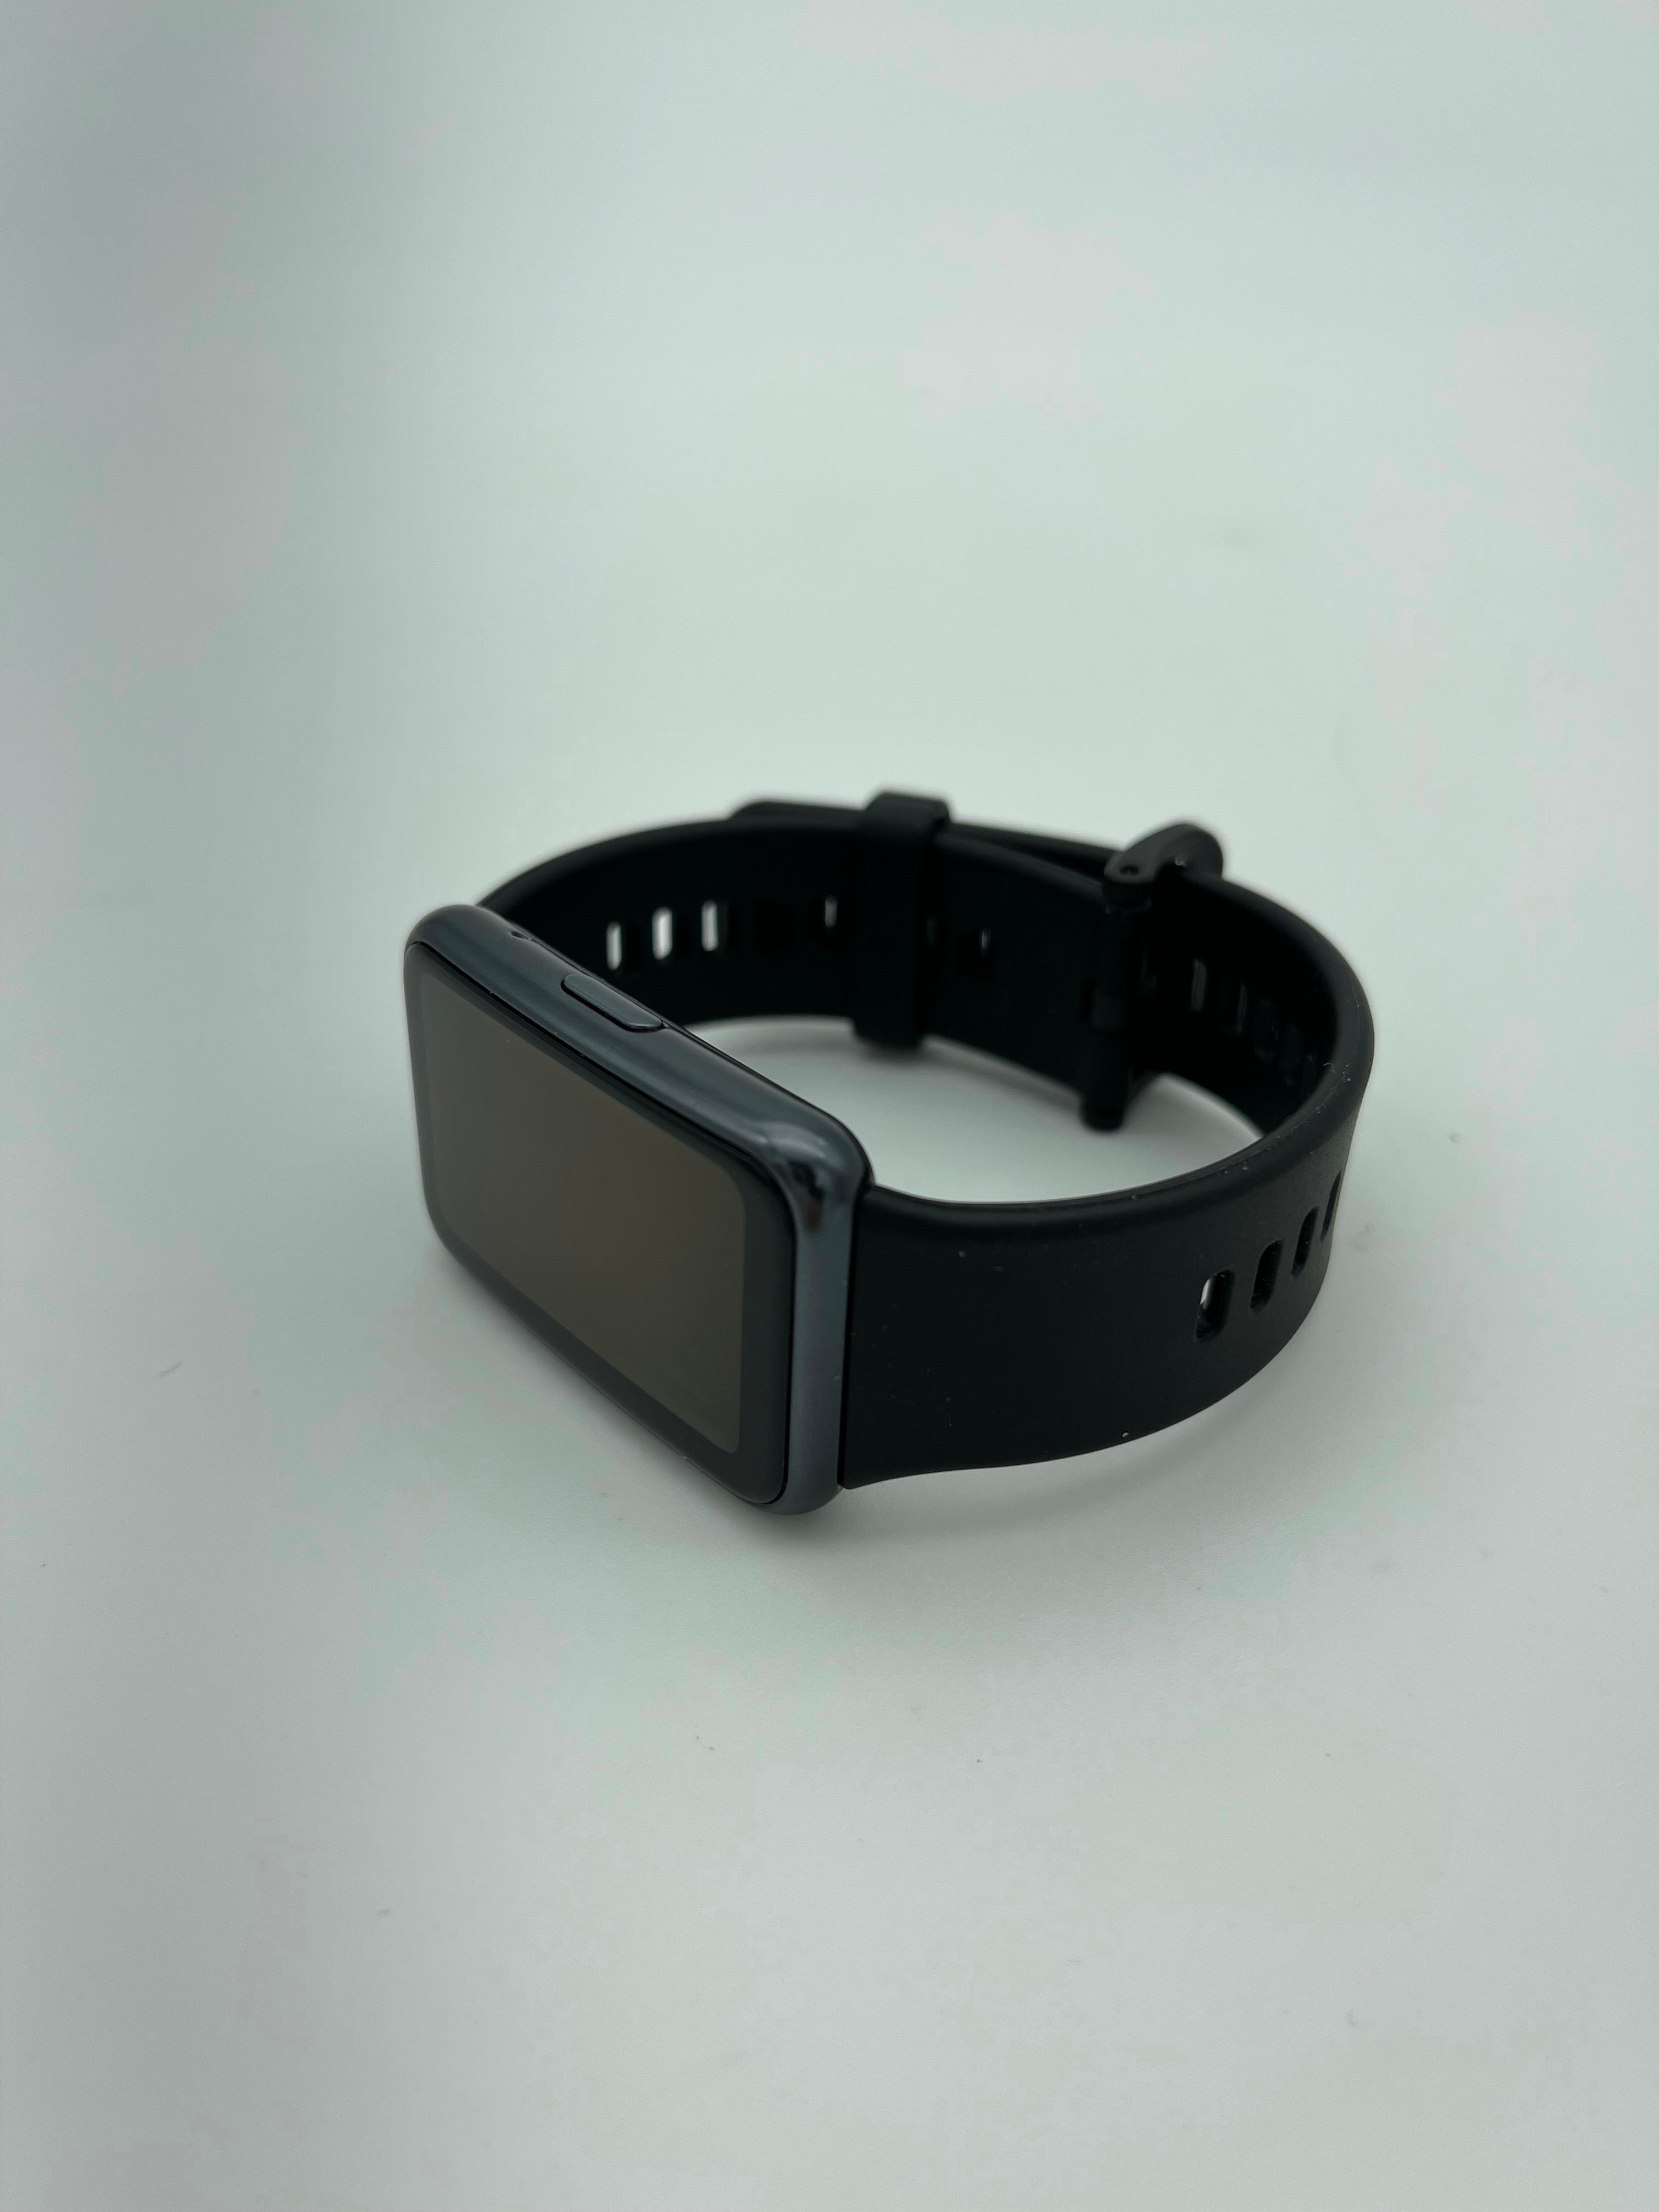 HUAWEI WATCH FIT Smartwatch - Graphite Black - Long Battery Life, AMOLED Display (TIA-B09)